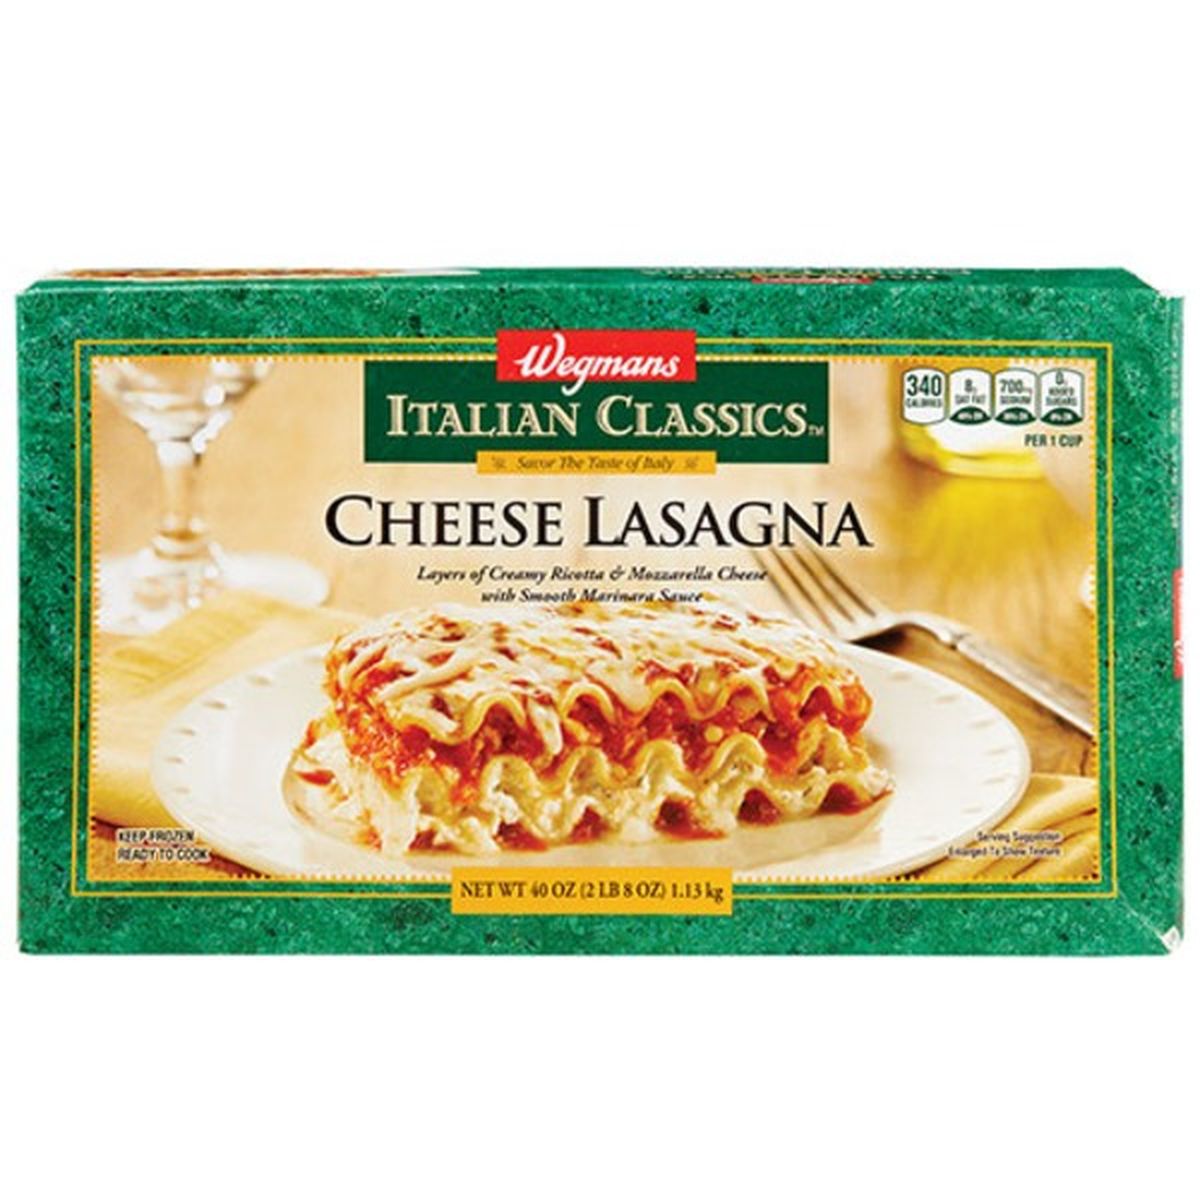 Calories in Wegmans Italian Classics Cheese Lasagna